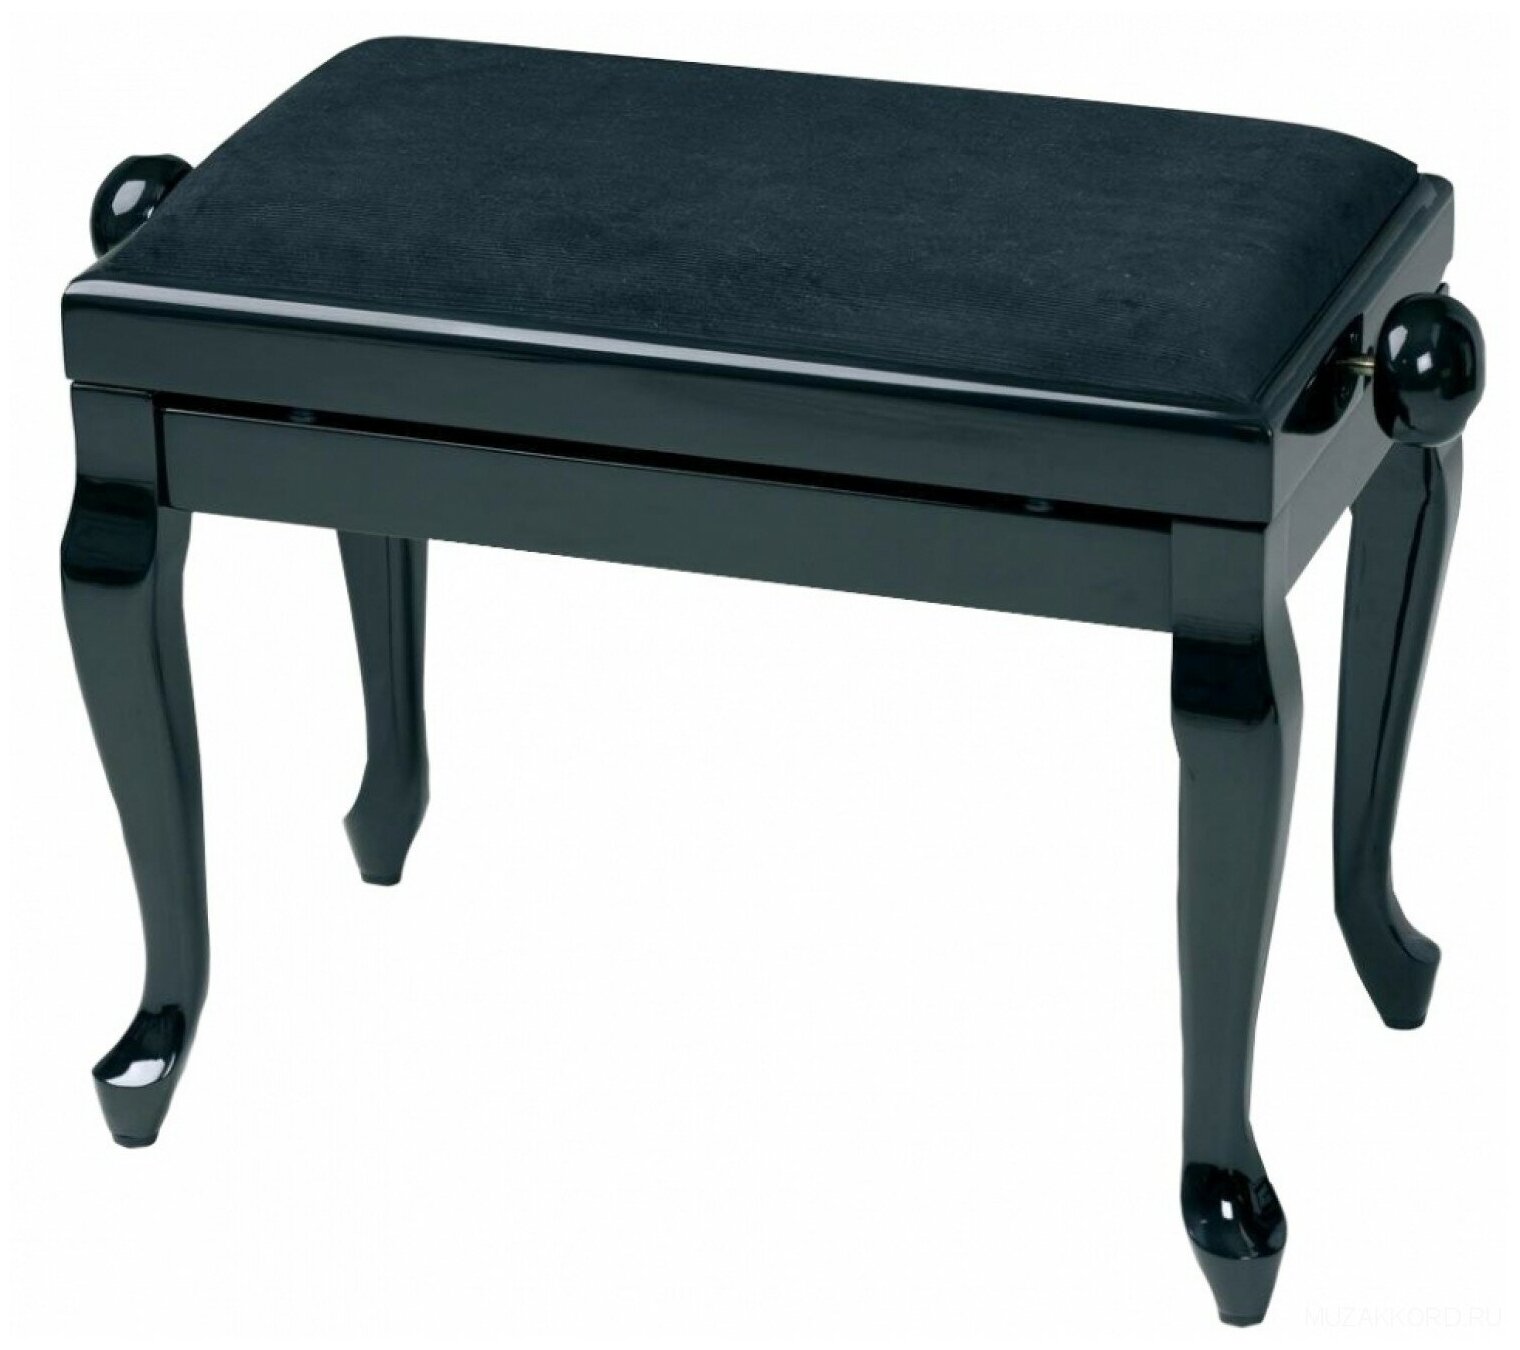 GEWA Piano Bench Deluxe Classic Black Highgloss банкетка черная глянцевая гнутые ножки верх черный (130330)